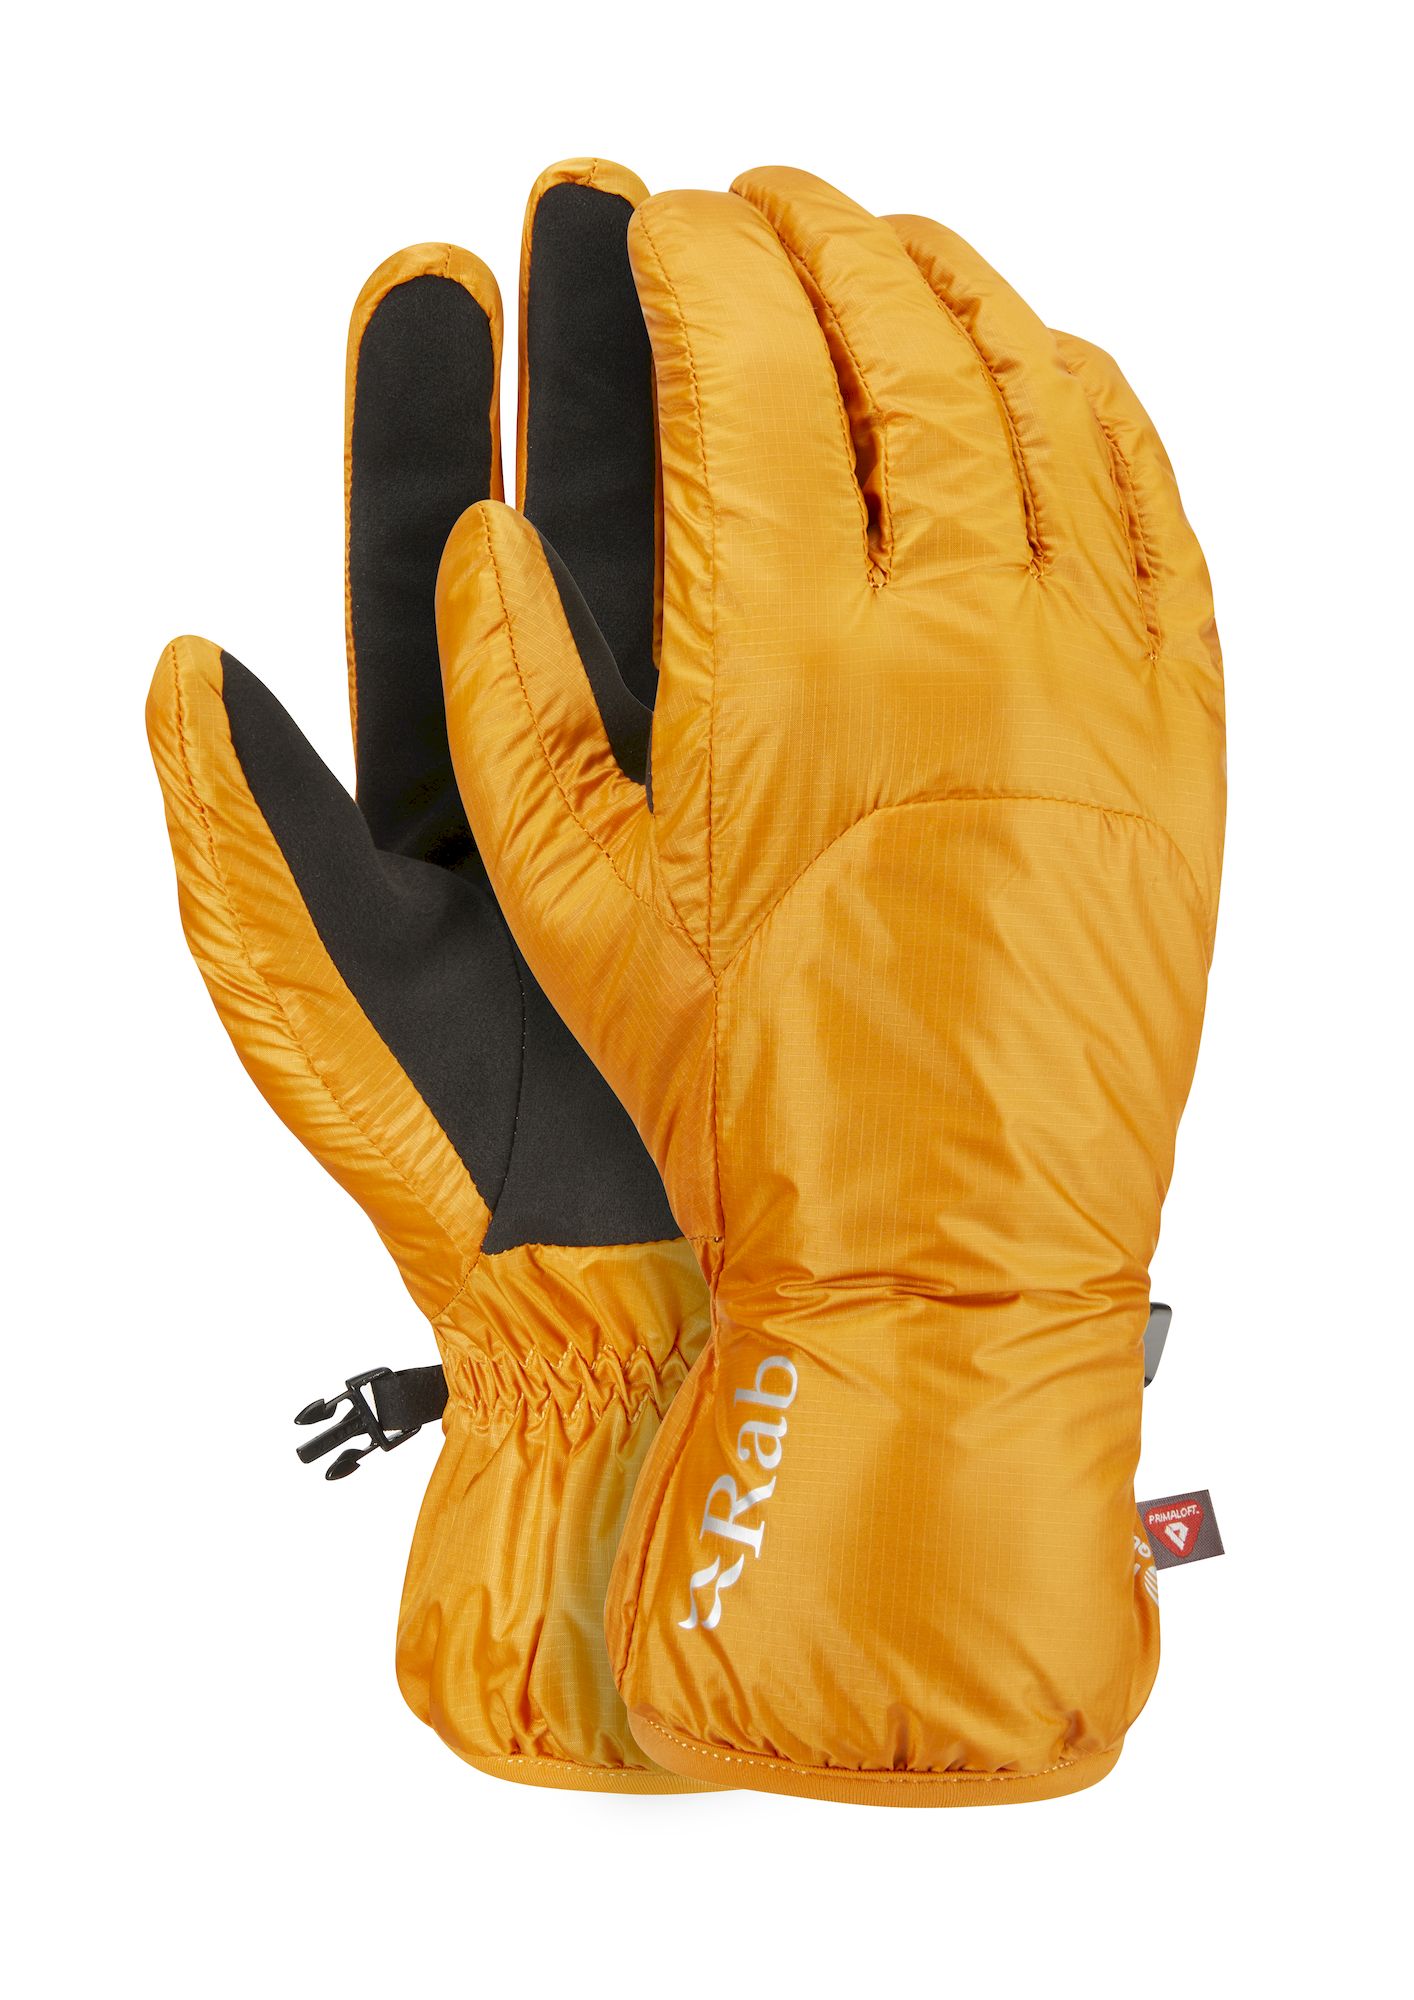 Rab Xenon Glove - Gants ski homme | Hardloop